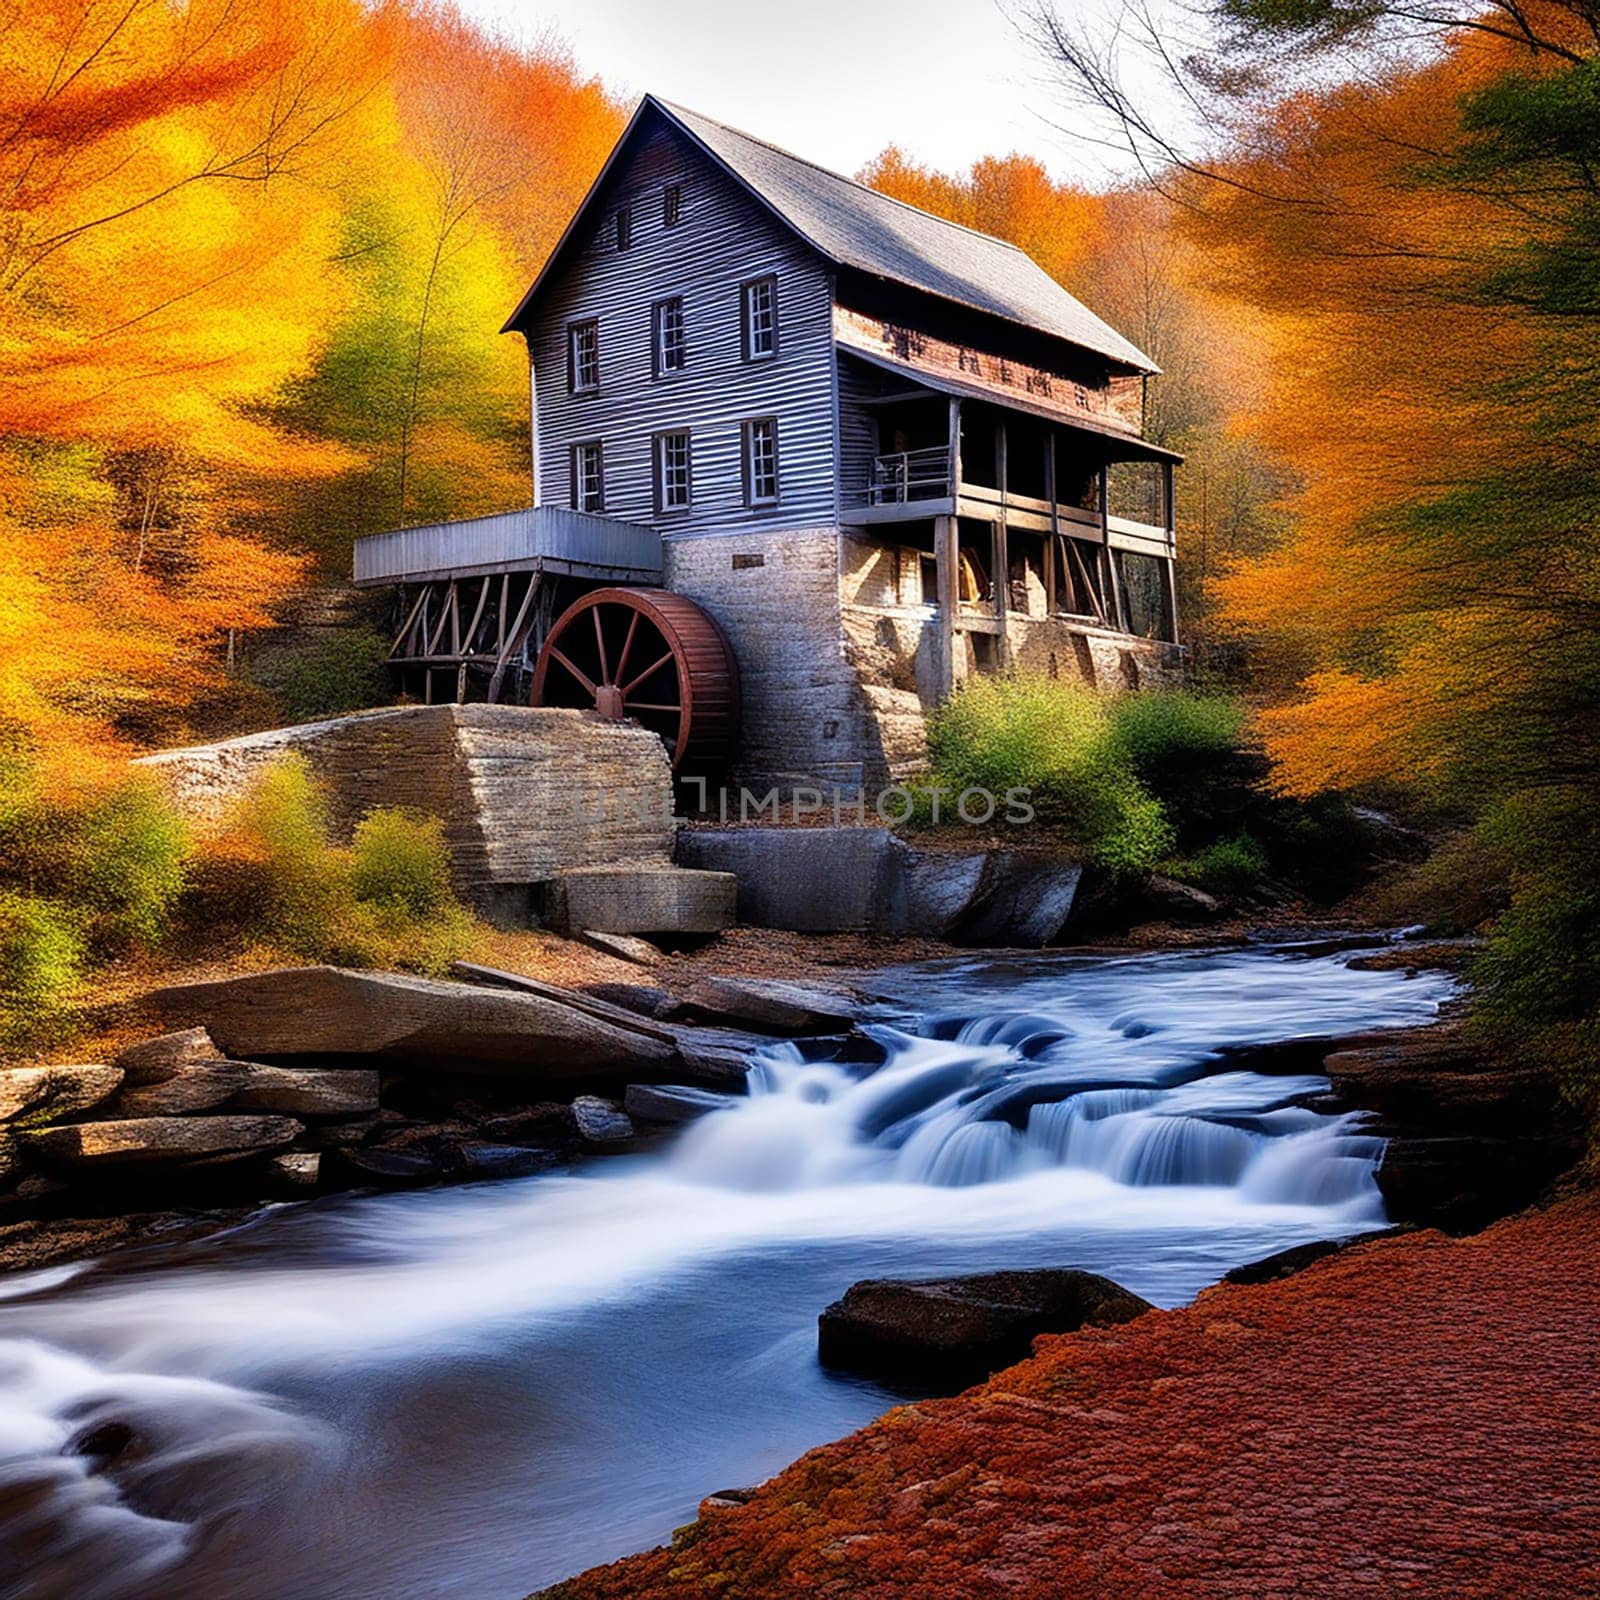 Autumn Splendor: Glade Creek Grist Mill Amidst Colorful October Foliage in West Virginia's Popular Fall Destination